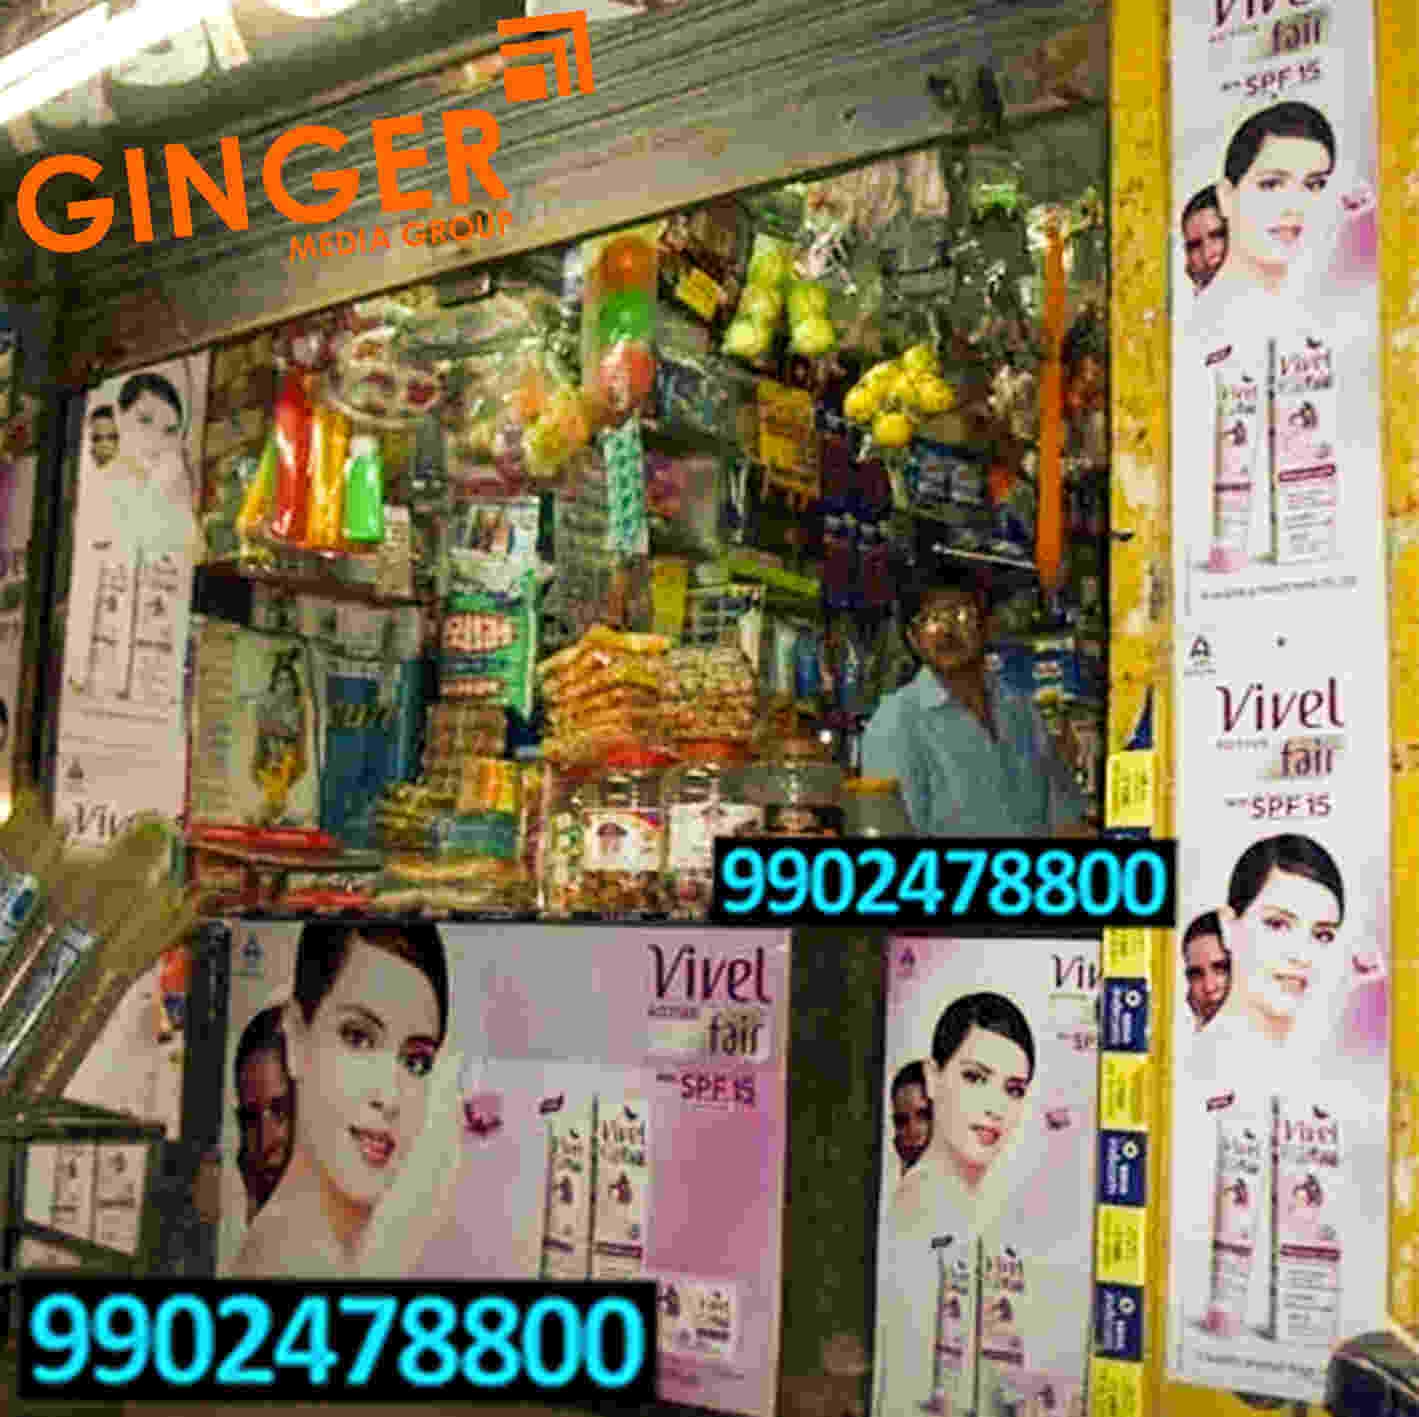 Retail Branding in India for Vivel cream